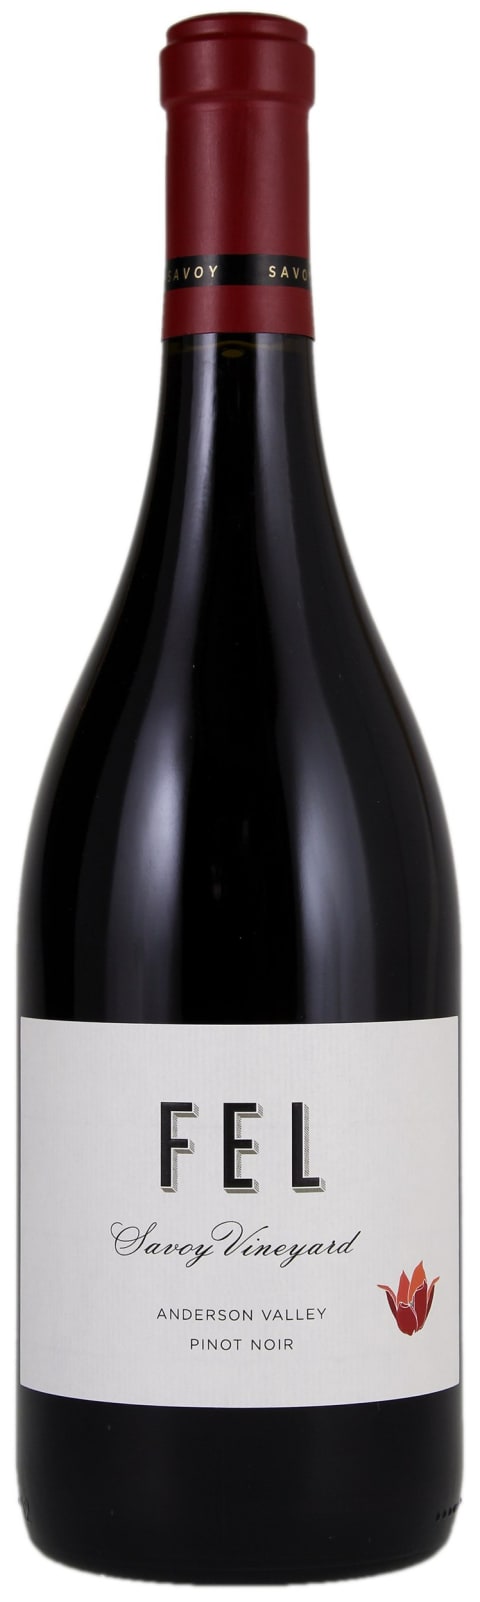 FEL Wines Anderson Valley Pinot Noir 2019